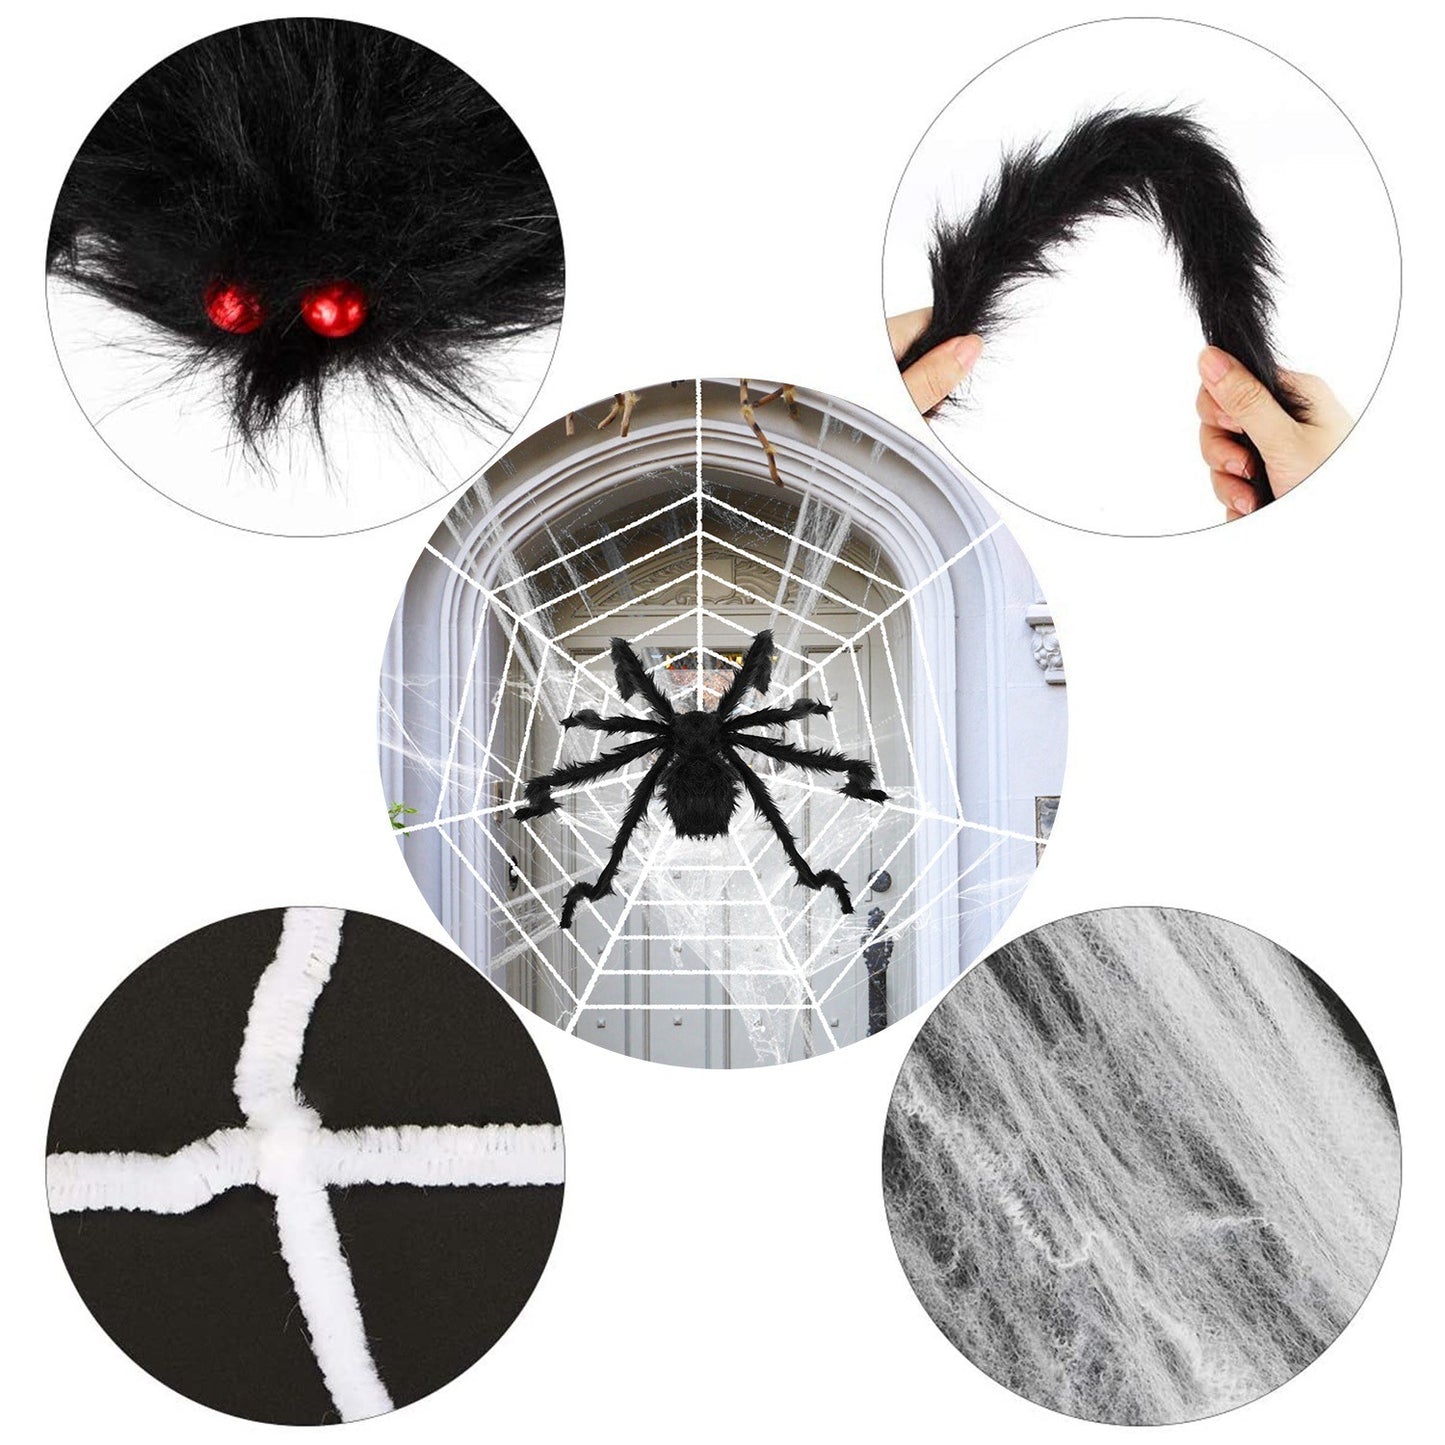 Halloween Decorations Spider Outdoor 49inch Halloween Spider with 126 inch Tarantula Mega Spider Web